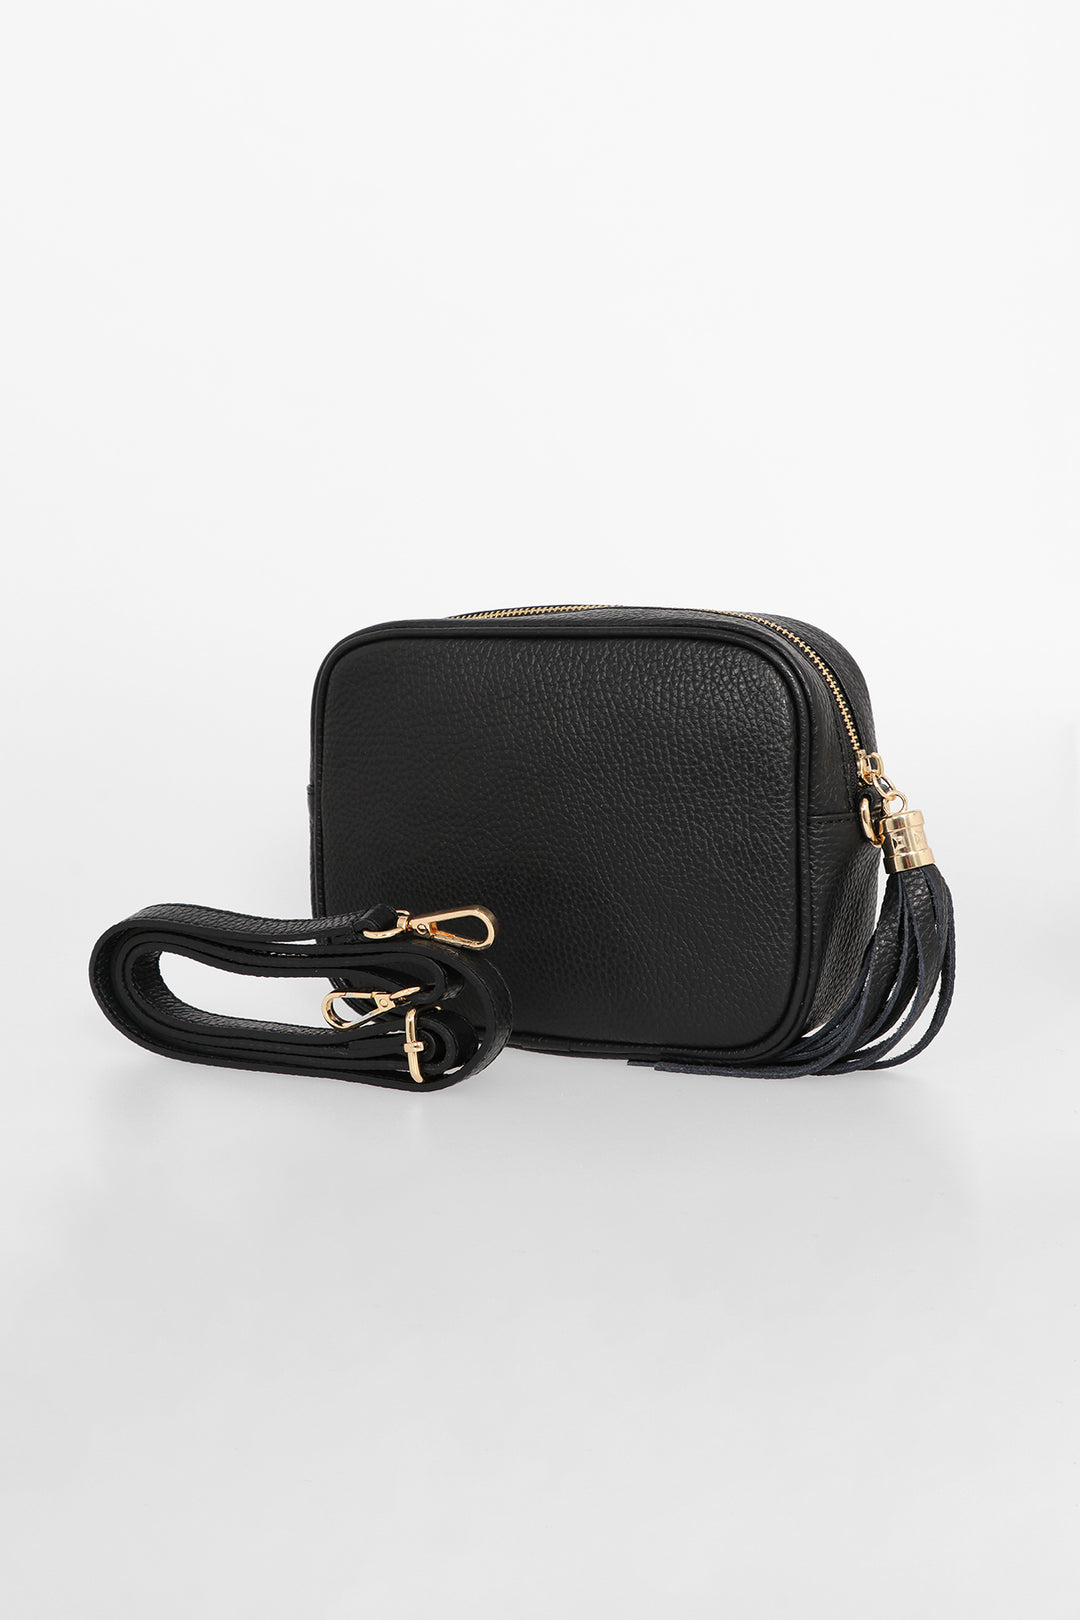 Black Genuine Italian Leather Camera Bag